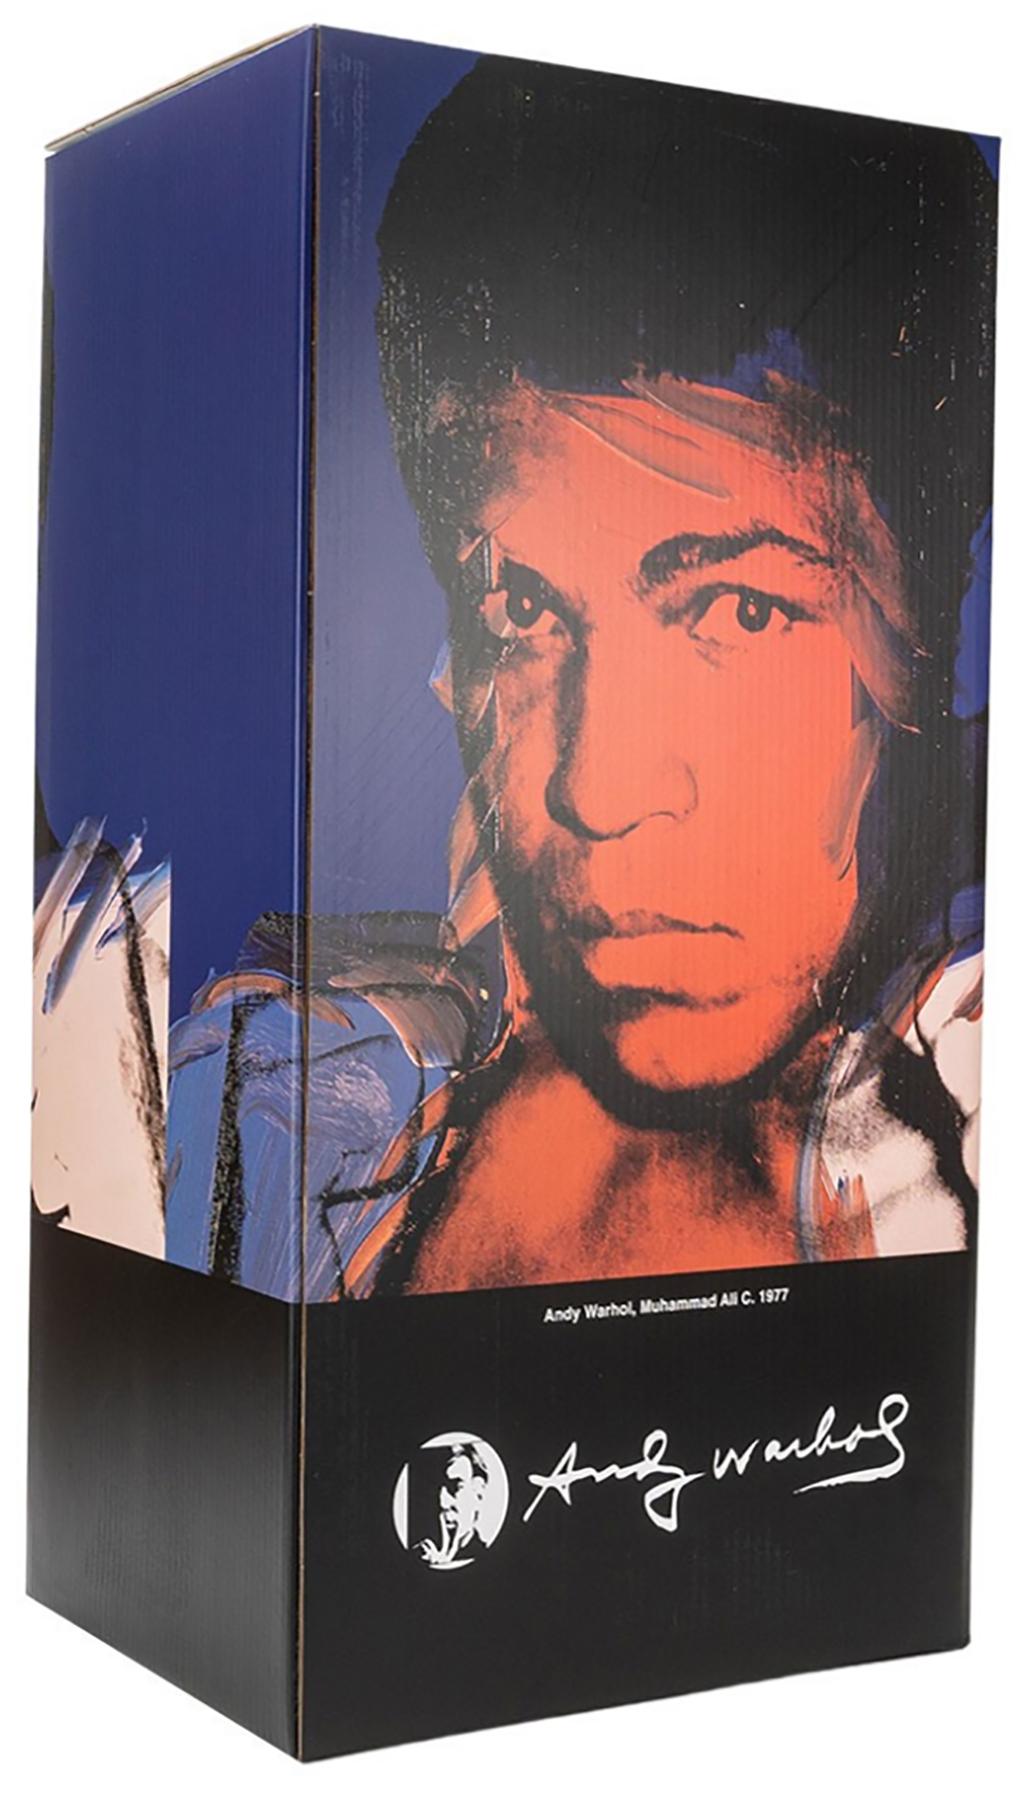  Andy Warhol Muhammad Ali Bearbrick 400% (Warhol Be@rbrick) - Pop Art Print by (after) Andy Warhol